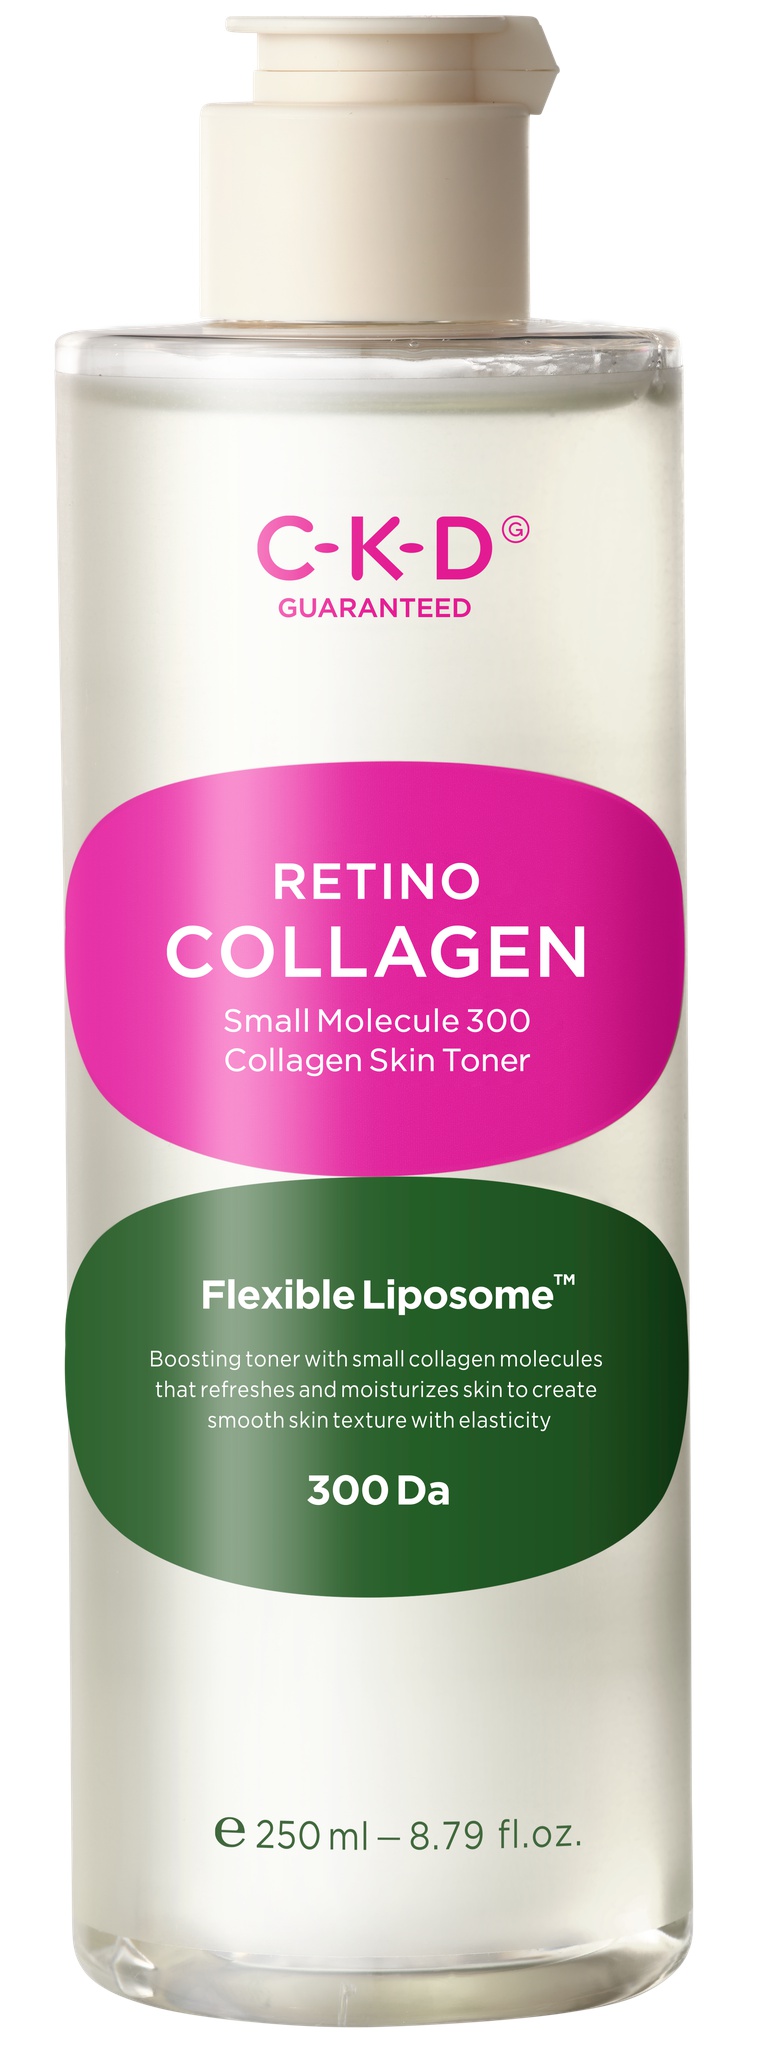 C-K-D Retino Collagen Small Molecule 300 Collagen Skin Toner